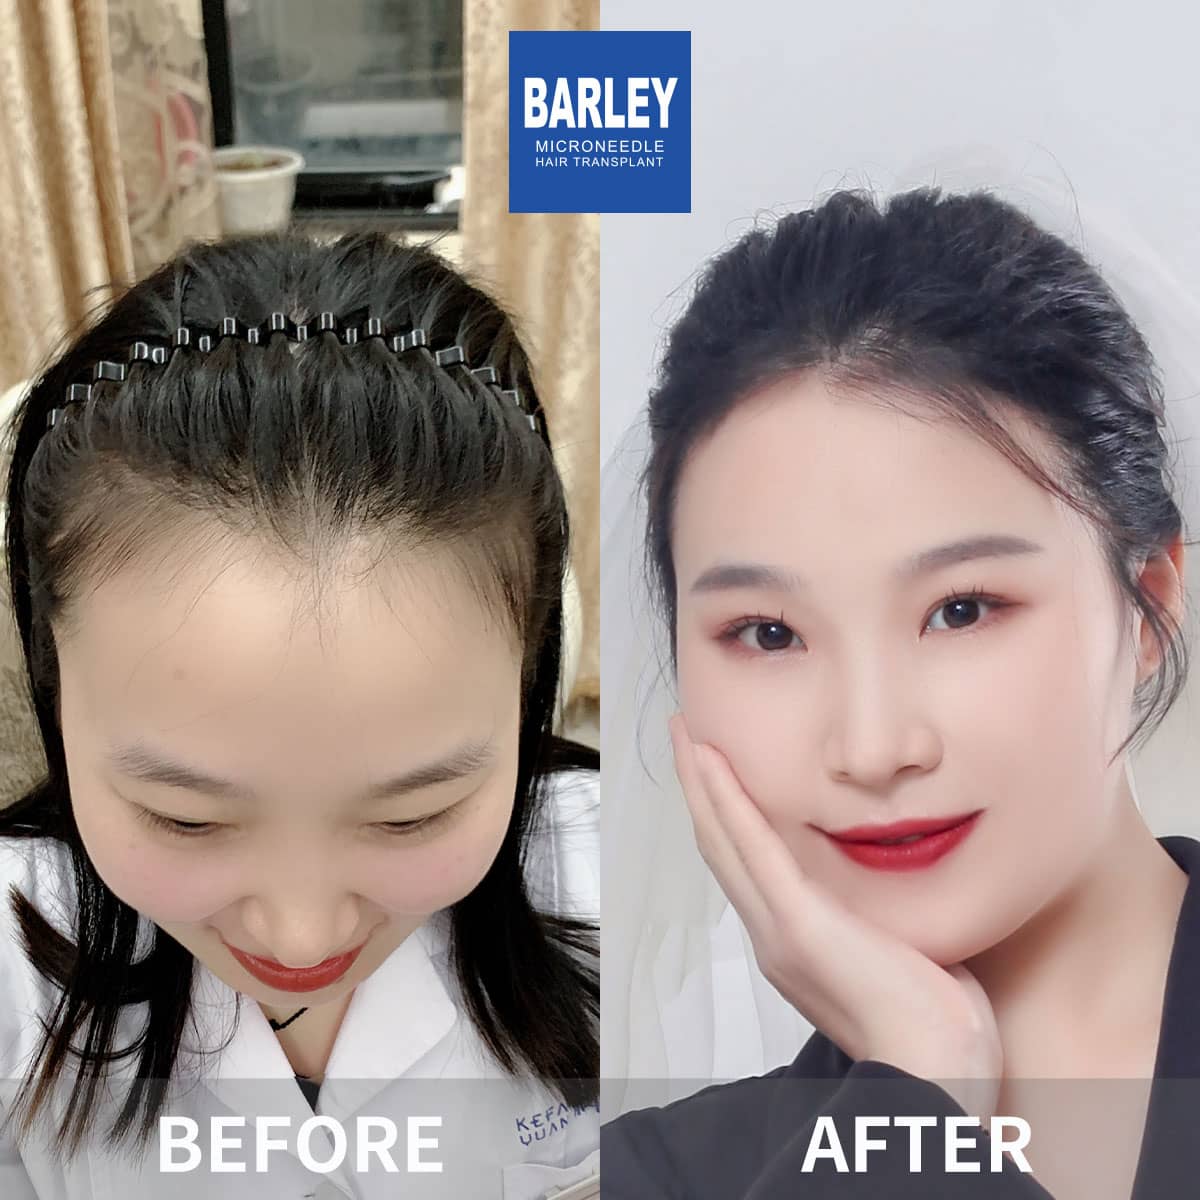 hair restoration results